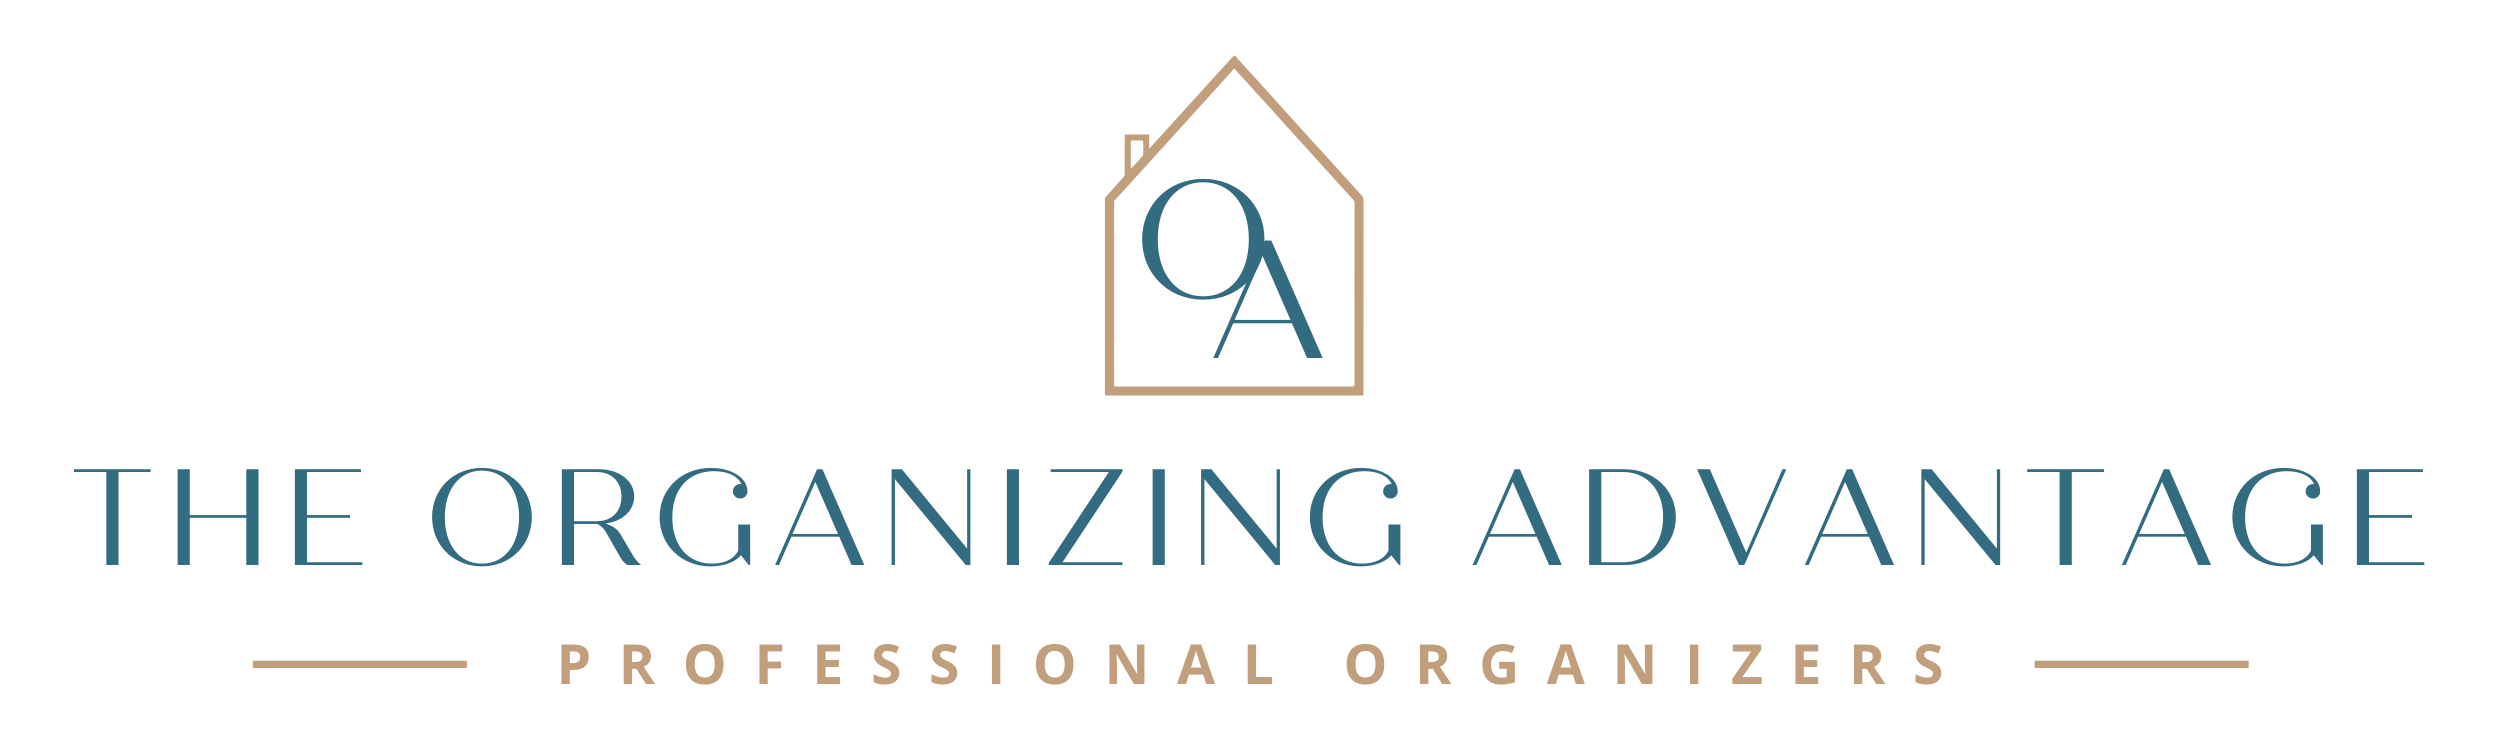 Minneapolis Professional Organizers | The Organizing Advantage